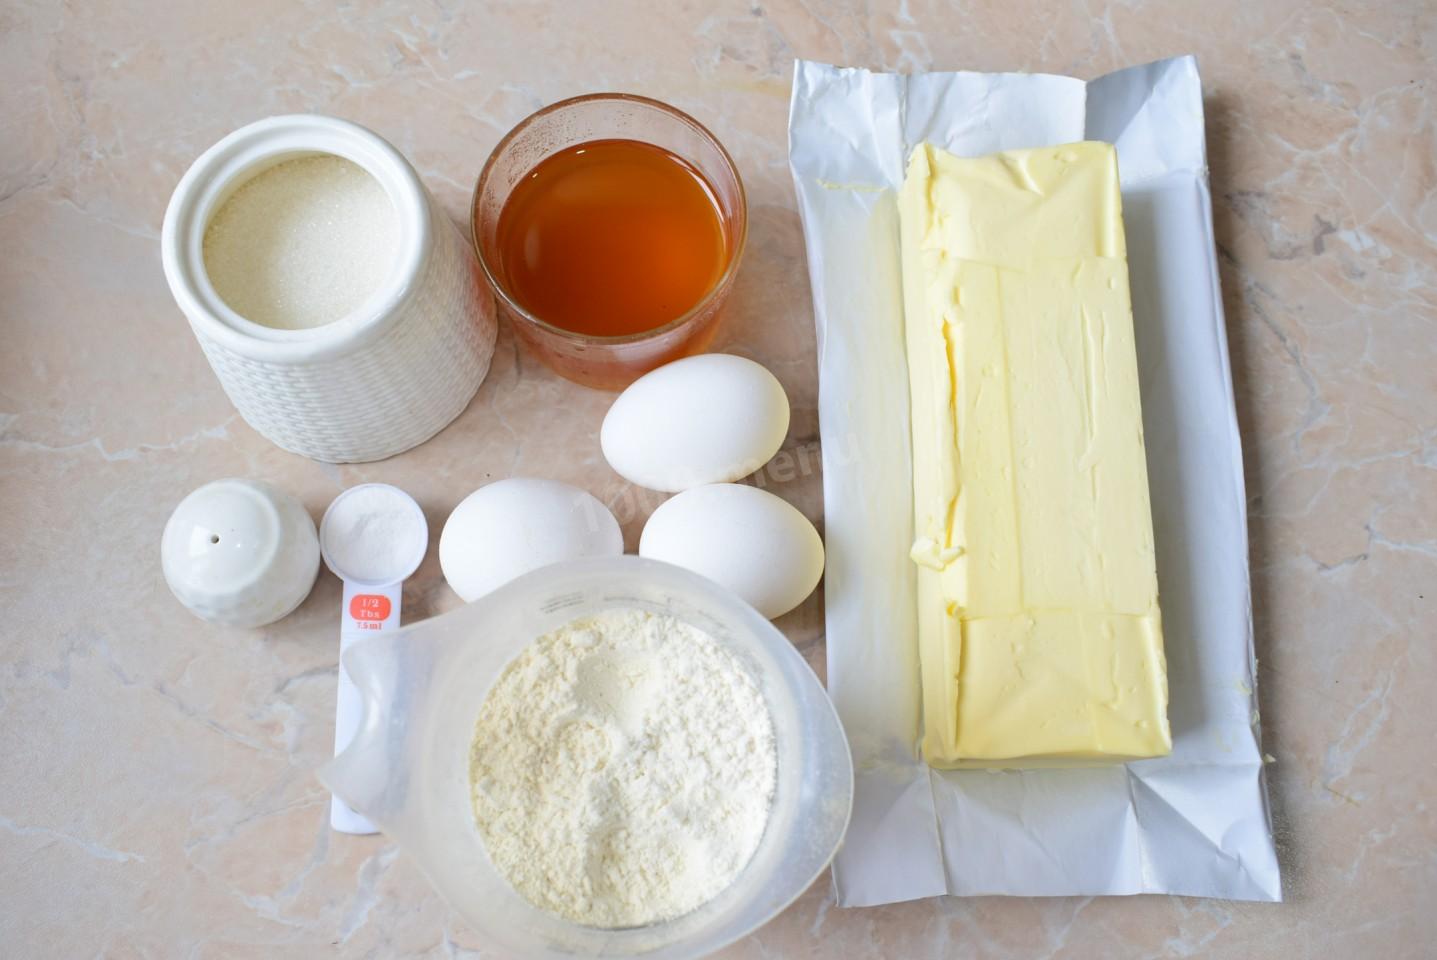 Крем яйца мука масло сахар. Медовое масло сливочное. Мука сода яйца и сахар. Сливочное масло с медом. Мед масло яйца.